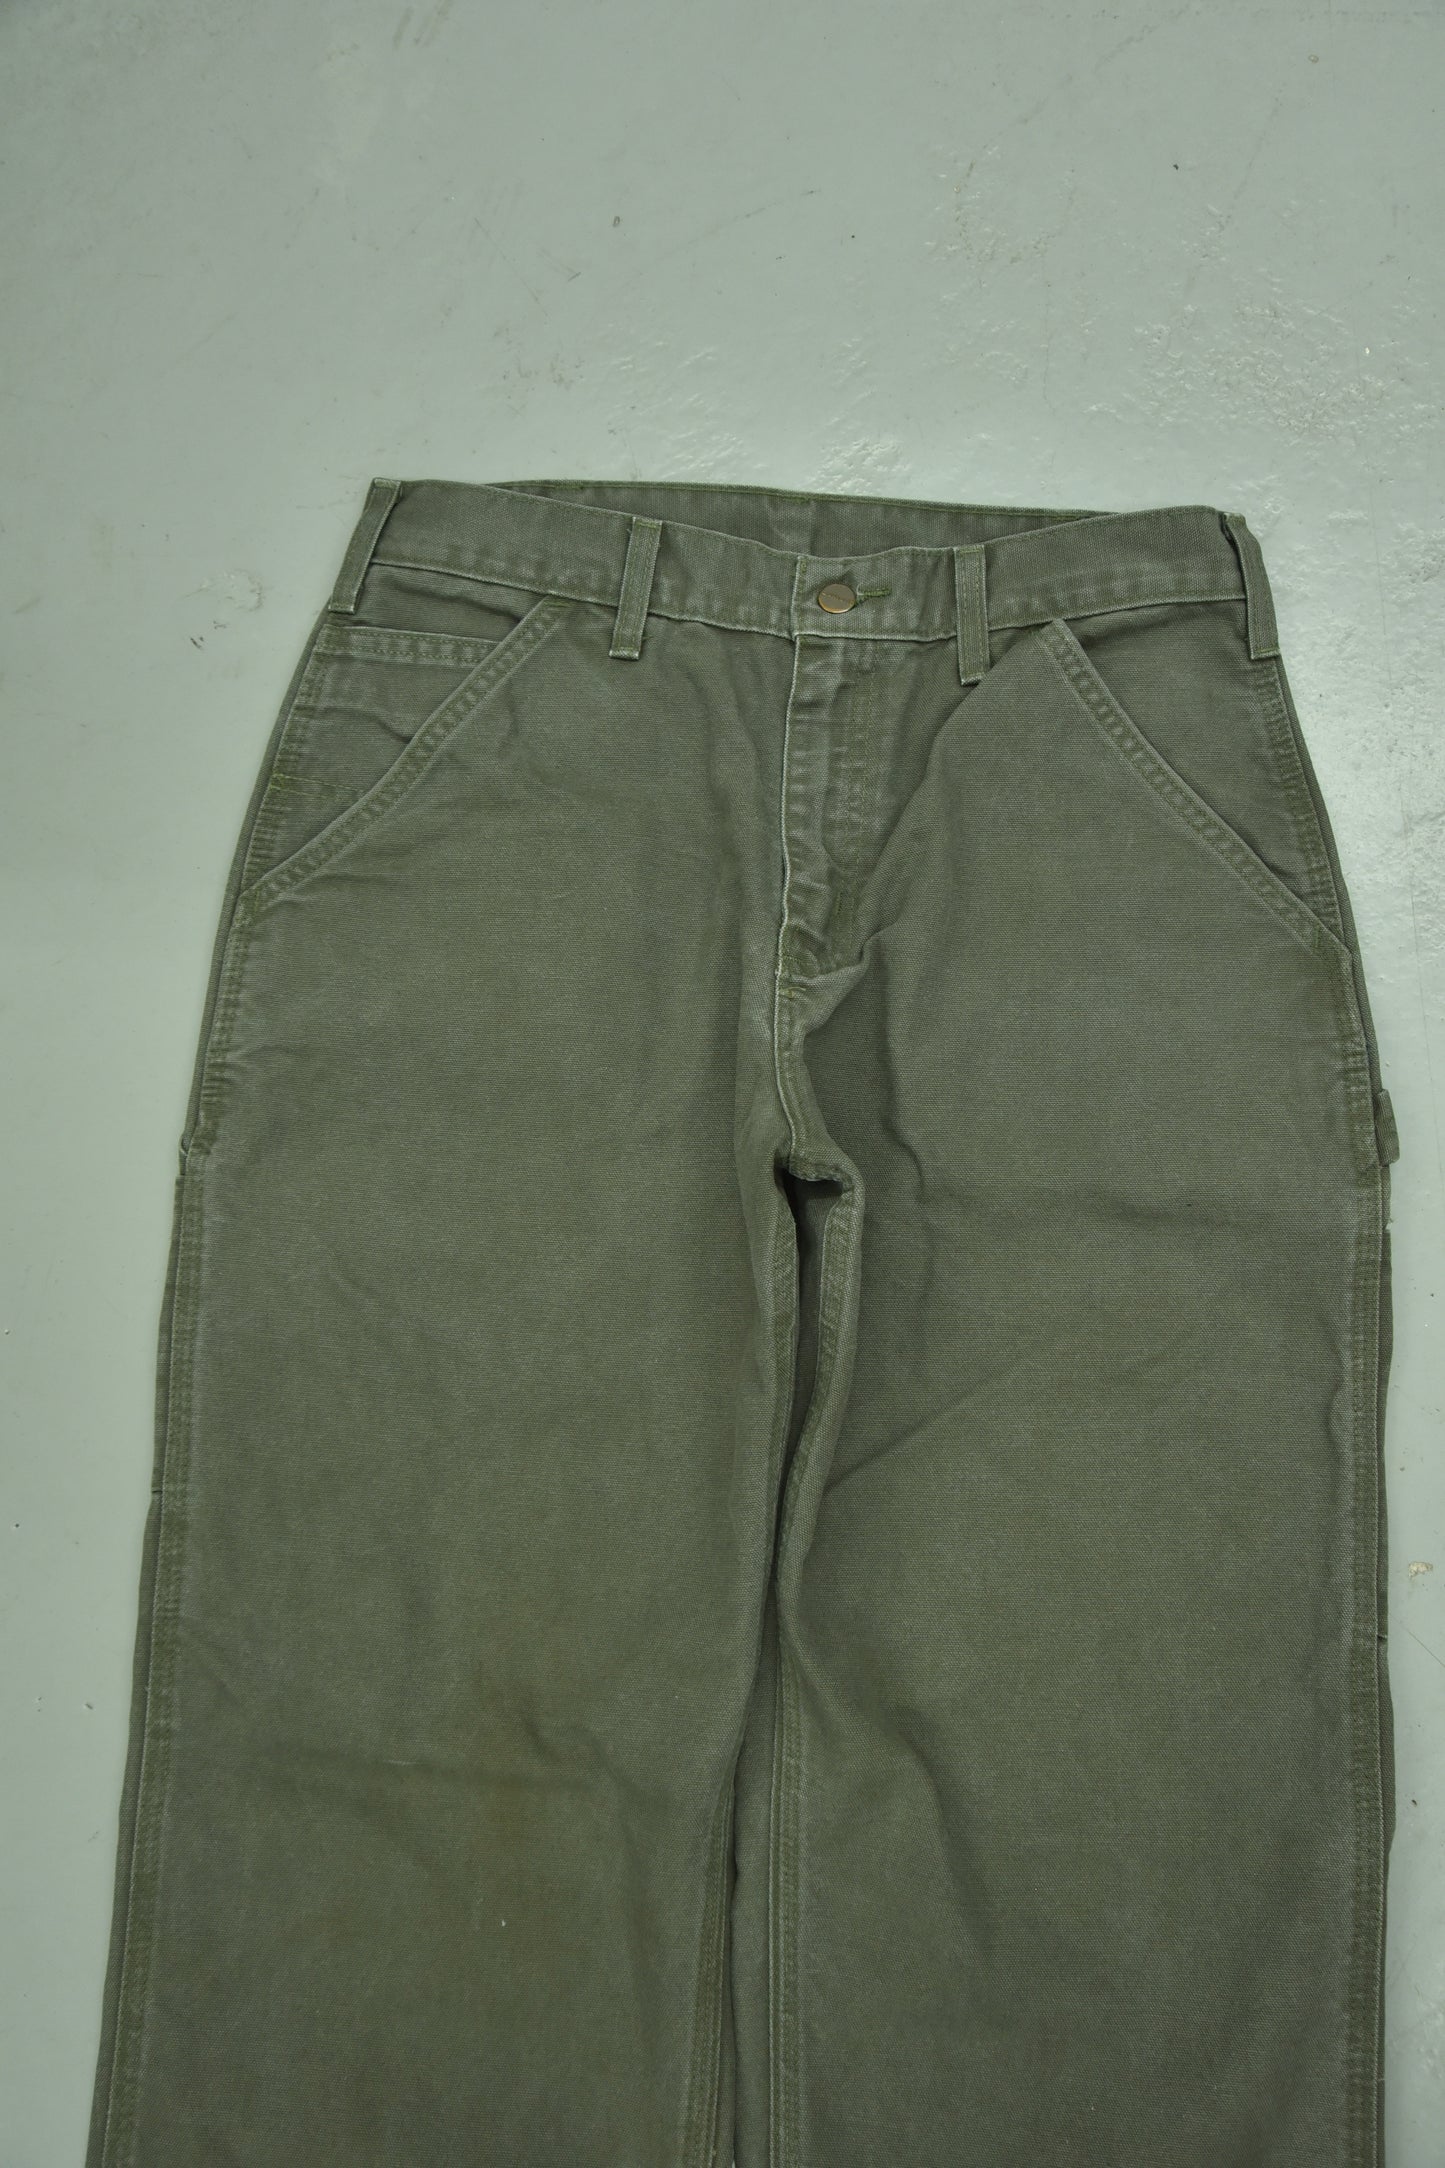 Carhartt Workwear Pants Green Vintage / 32x30